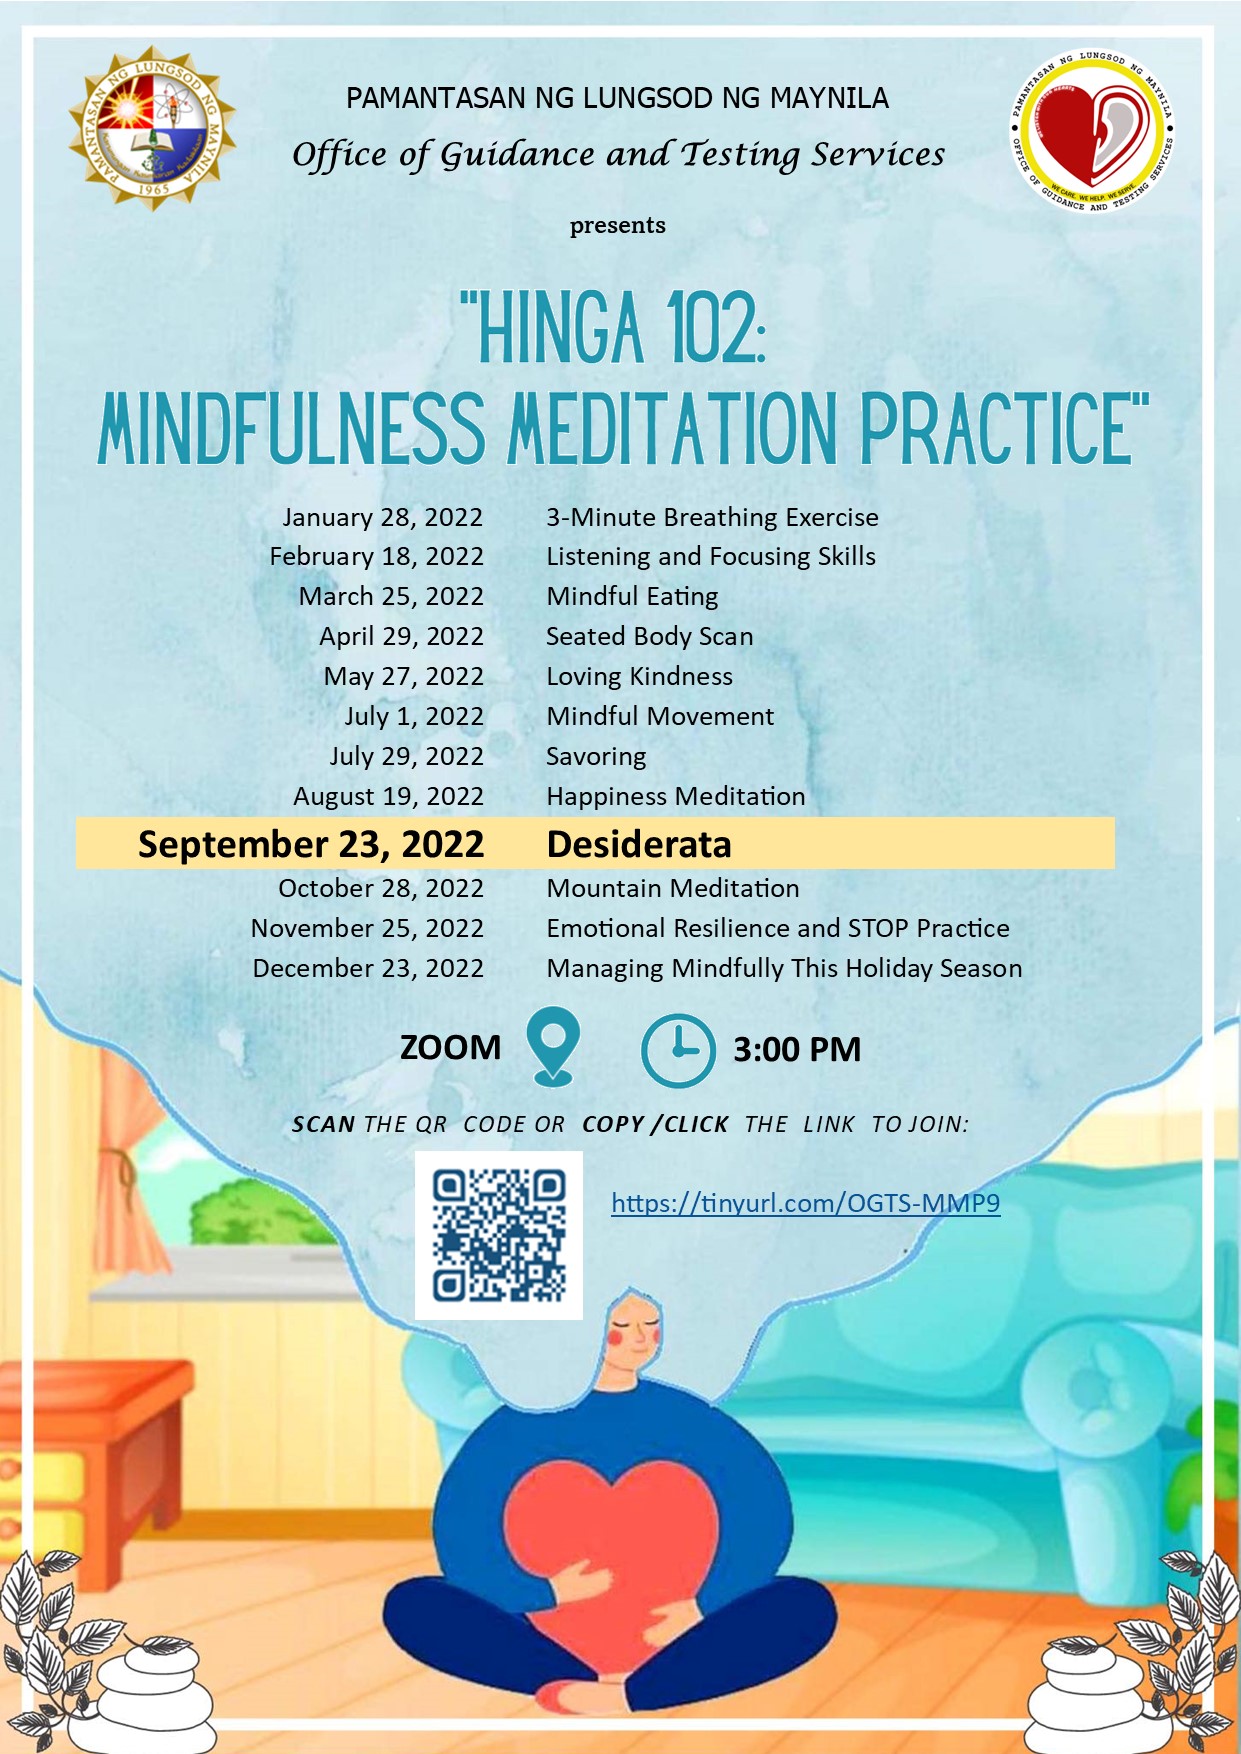 Join Hinga 102's Desiderata on September 23, 3 PM